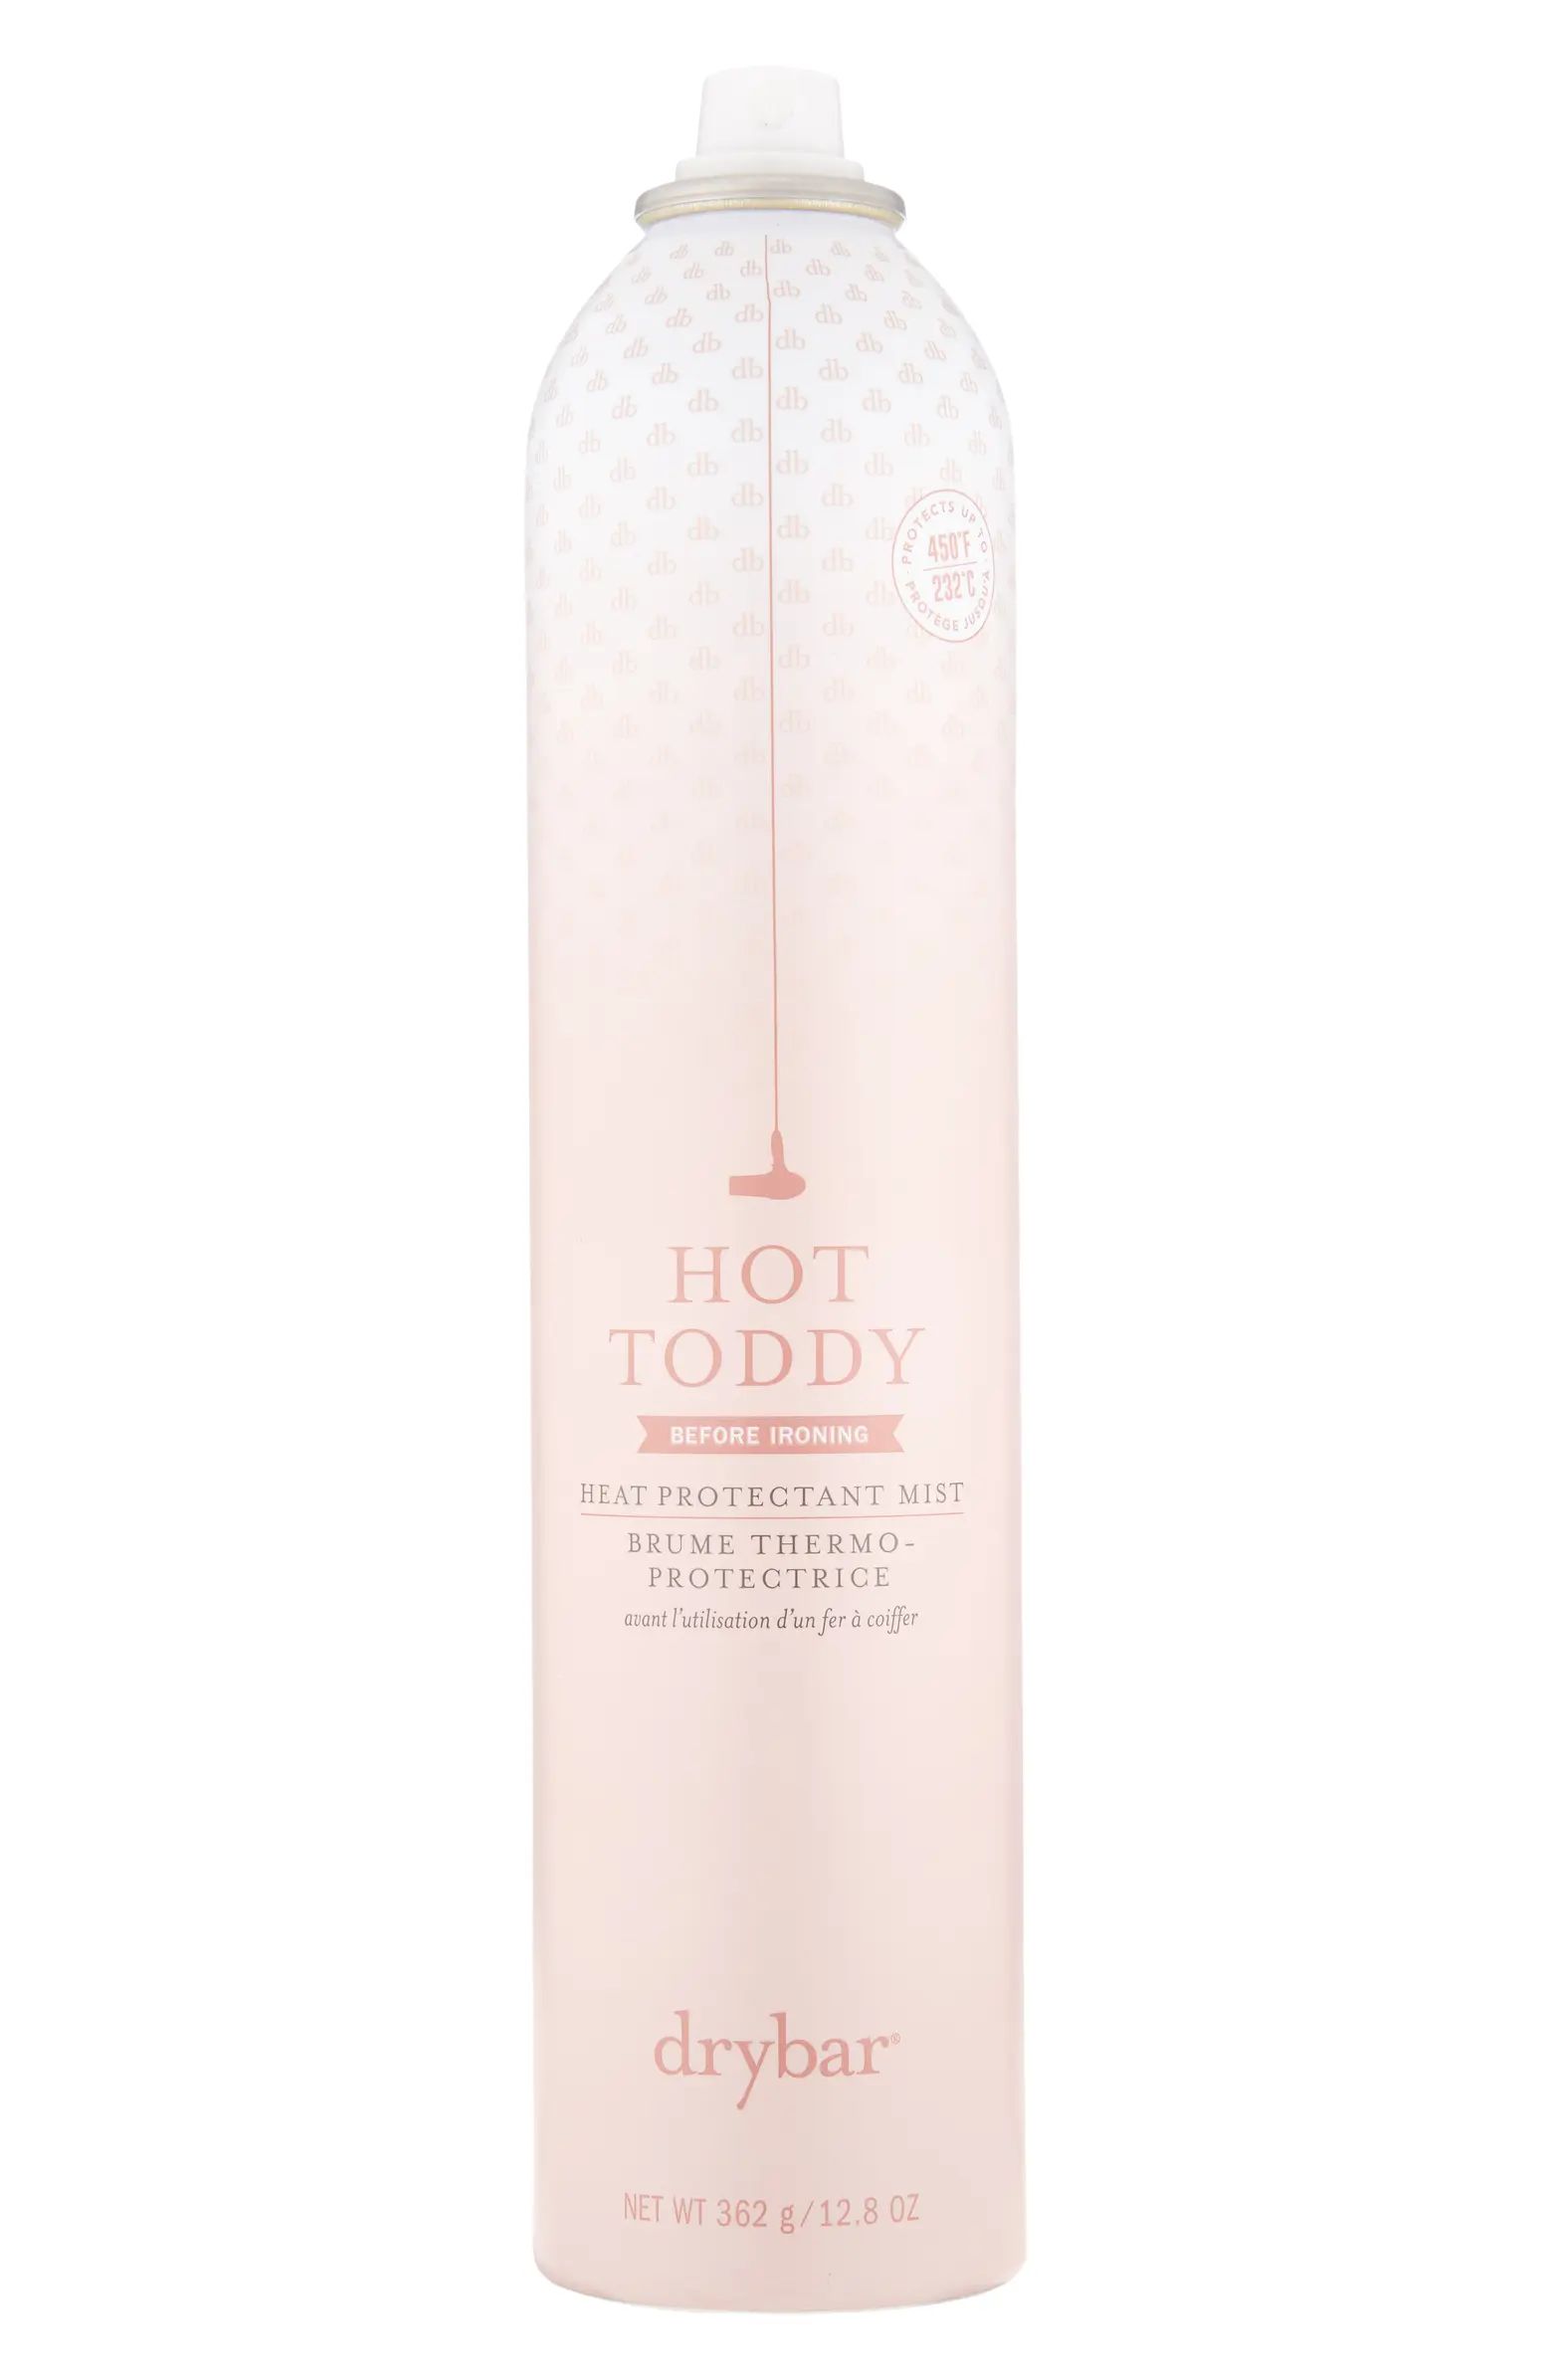 Jumbo Hot Toddy Mist $81 Value | Nordstrom